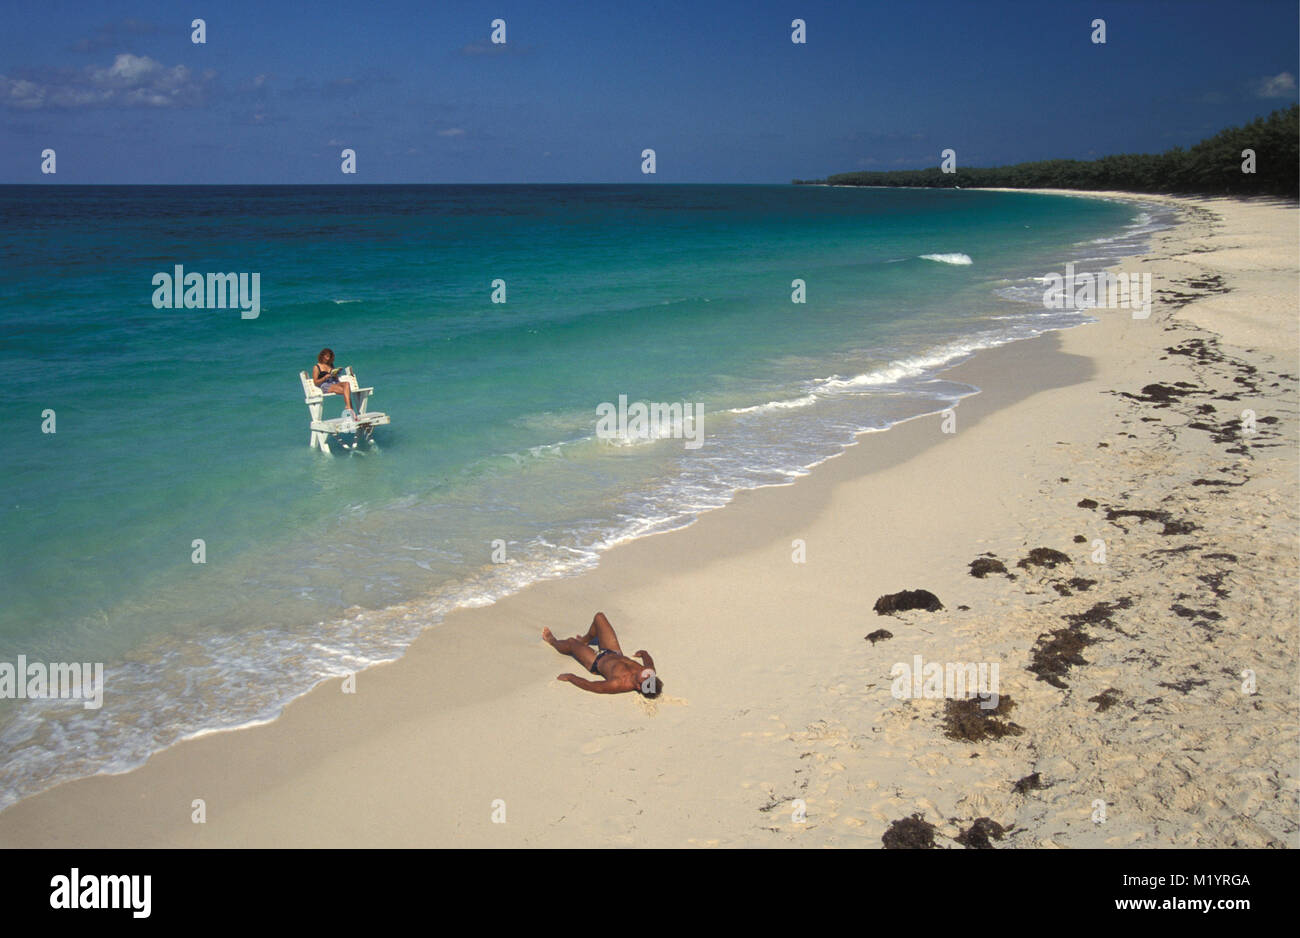 The Bahamas. Bimini Islands. Caribbean island. Woman on beach relaxing on platform in shallow tropical water. Man sunbathing on beach. Stock Photo